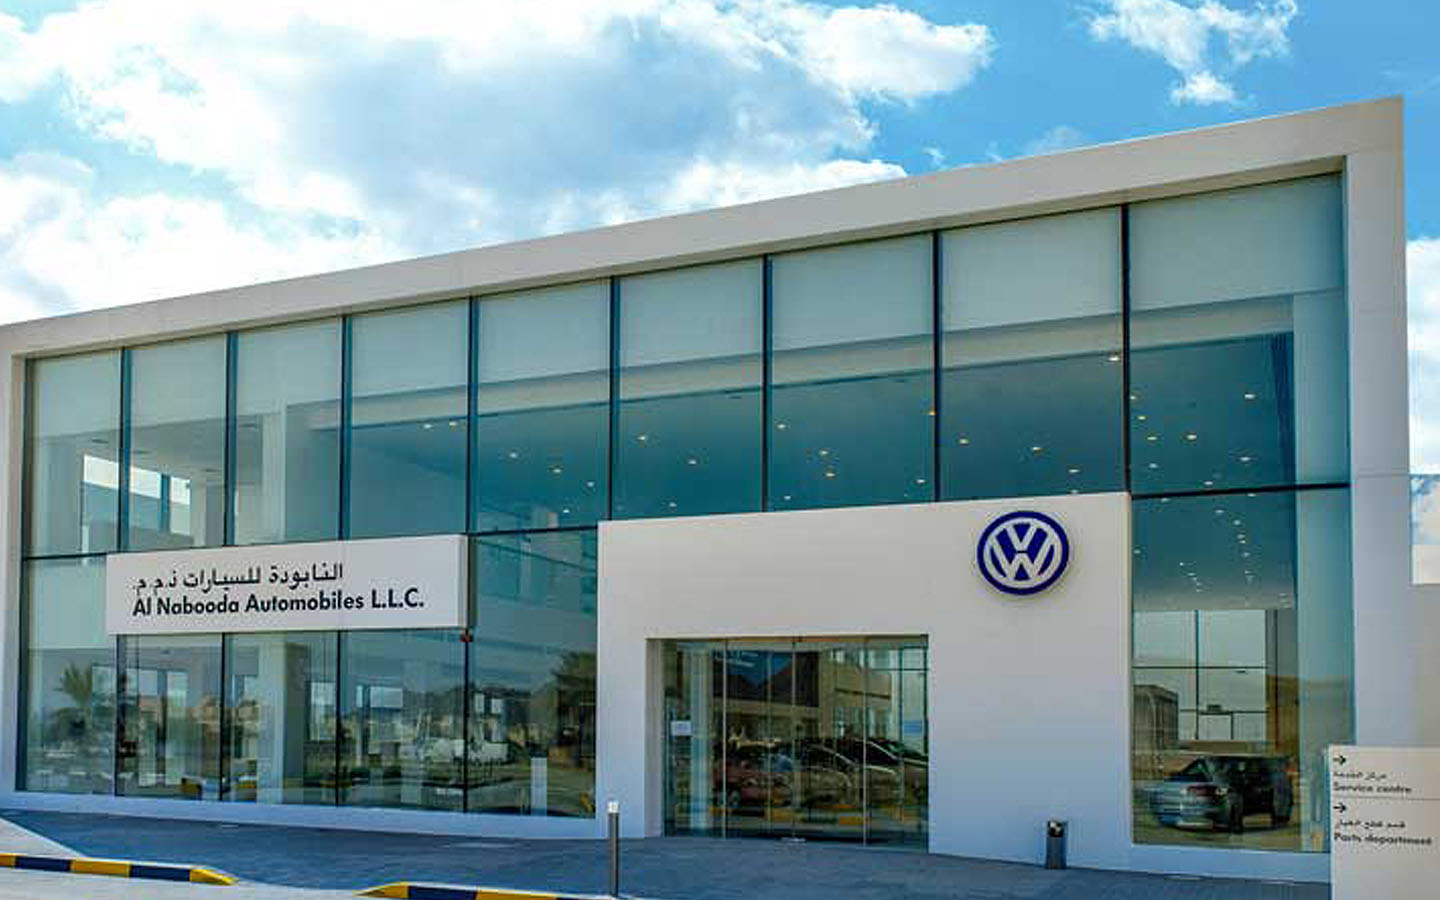 Al Nabooda Automobiles has a showroom and service centre in Sharjah